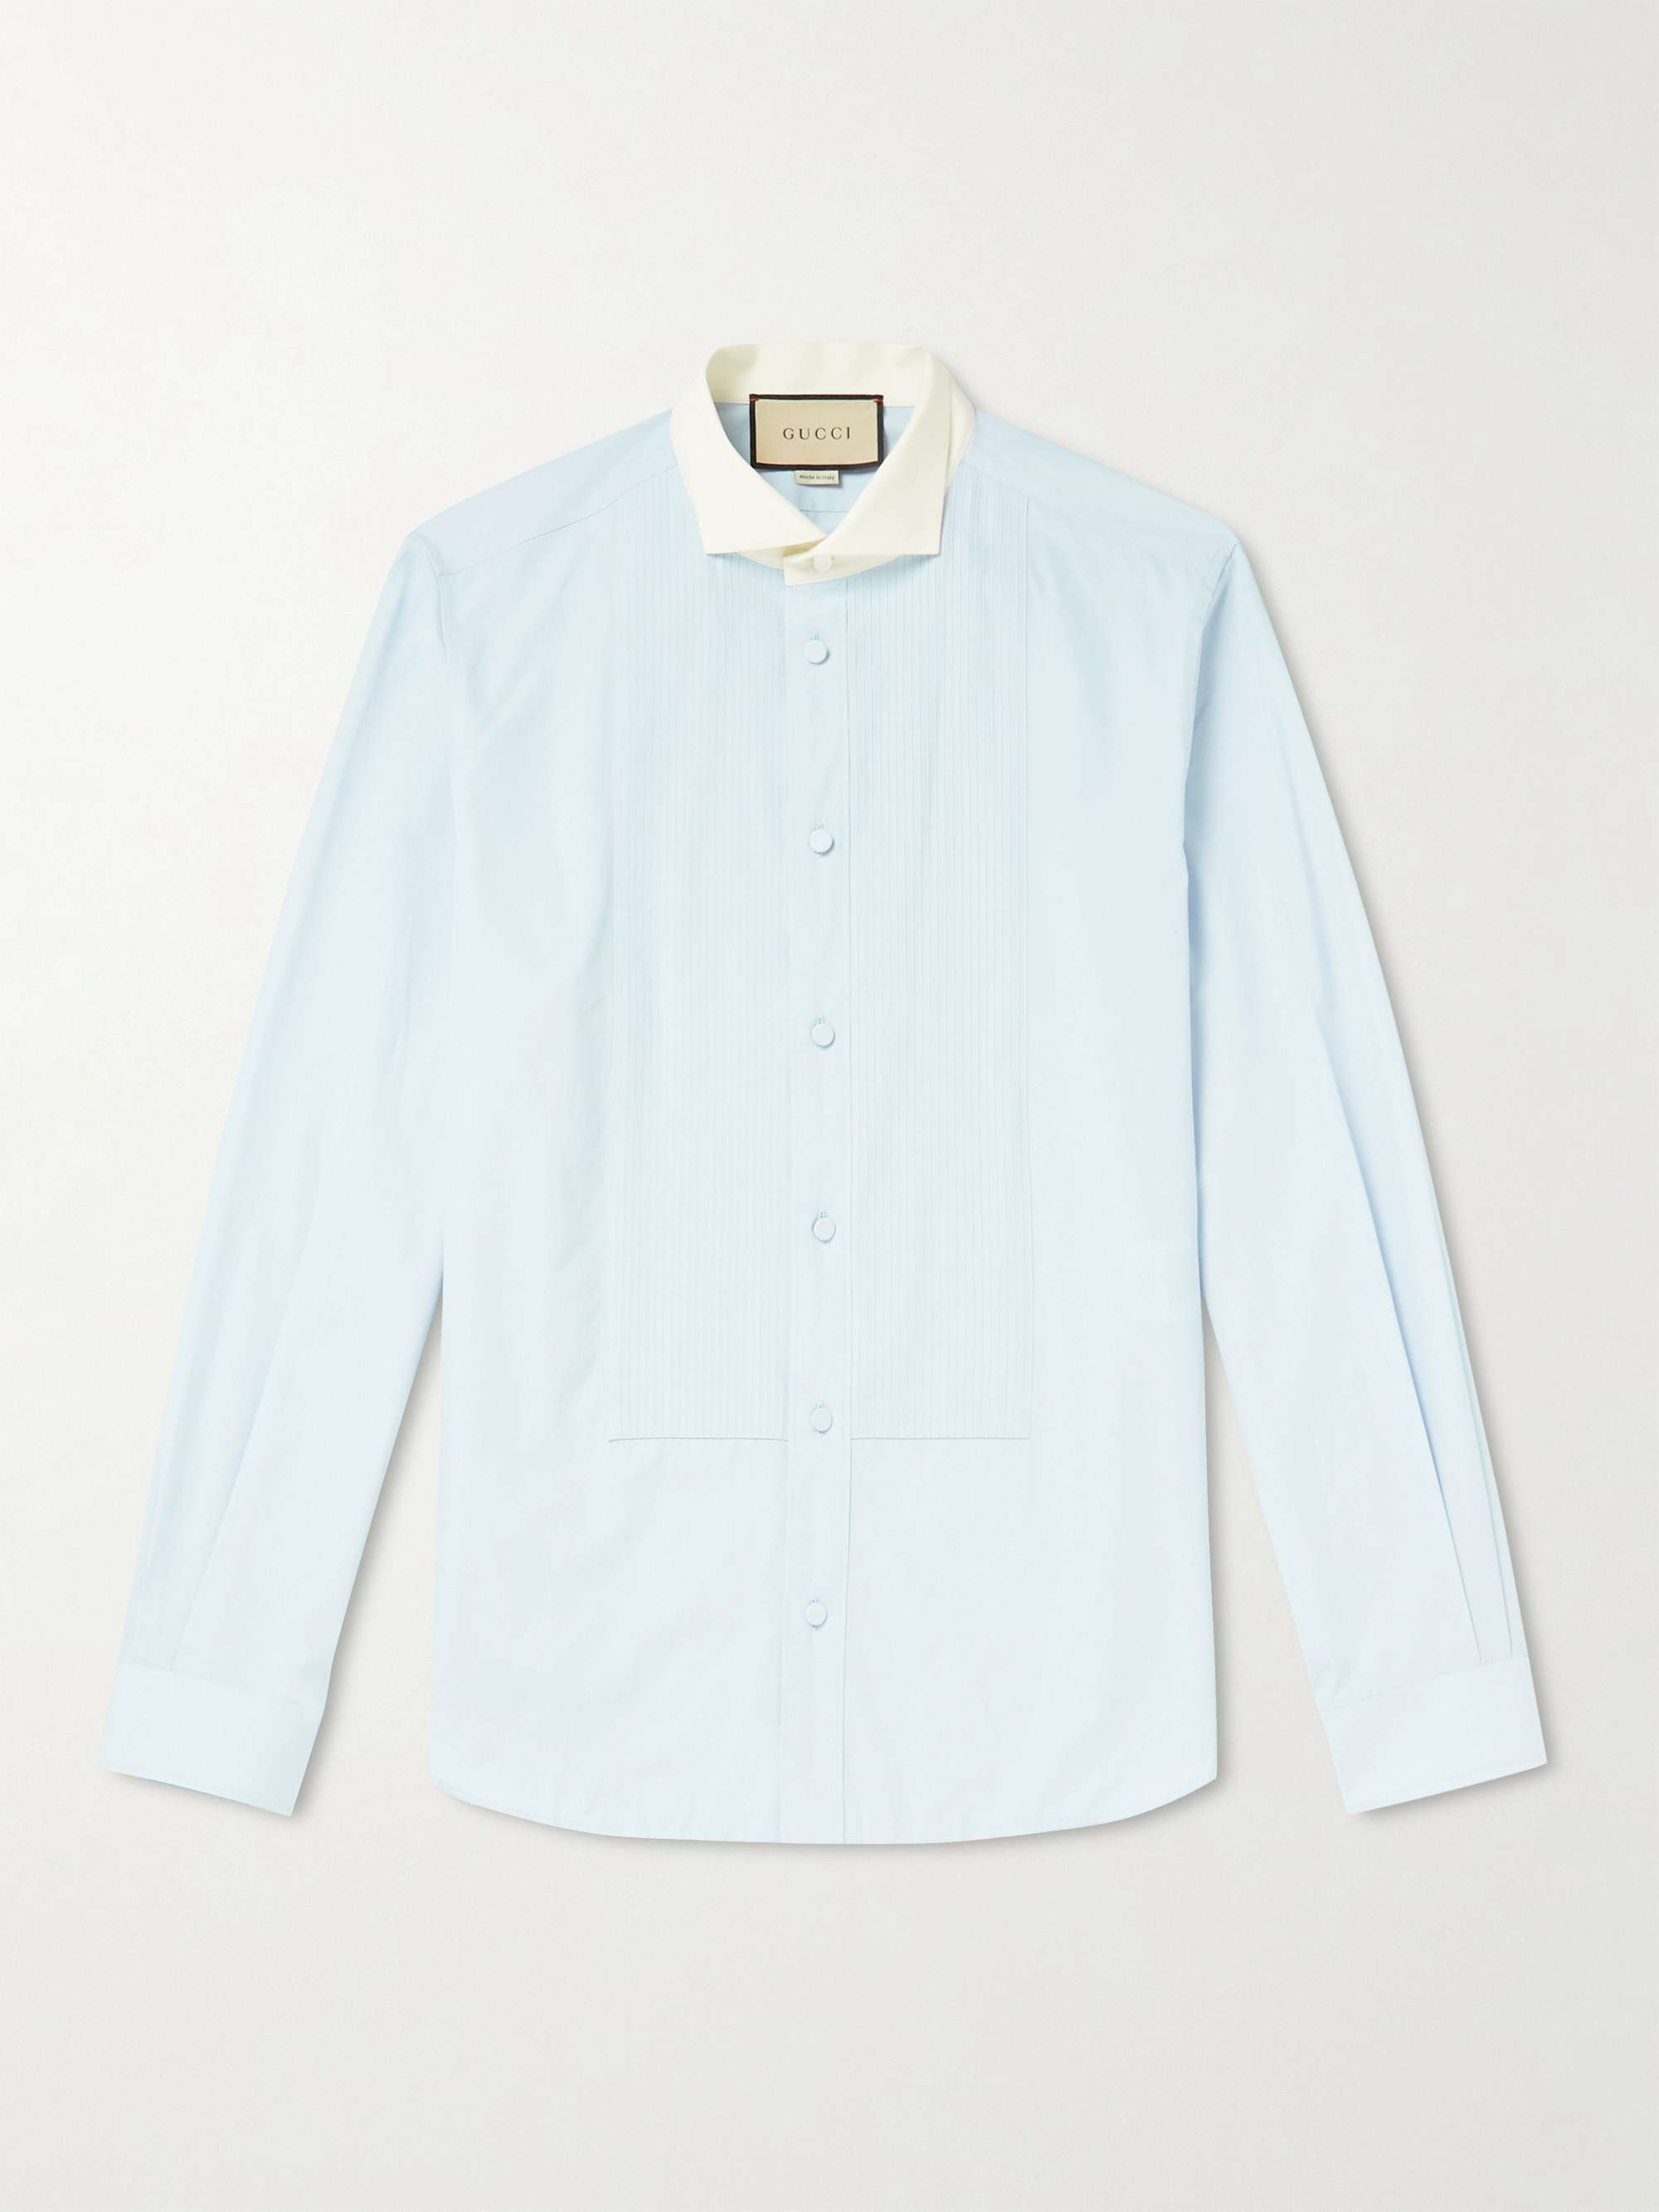 Light blue Two-Tone Pleated Cotton-Poplin Shirt | GUCCI | MR PORTER